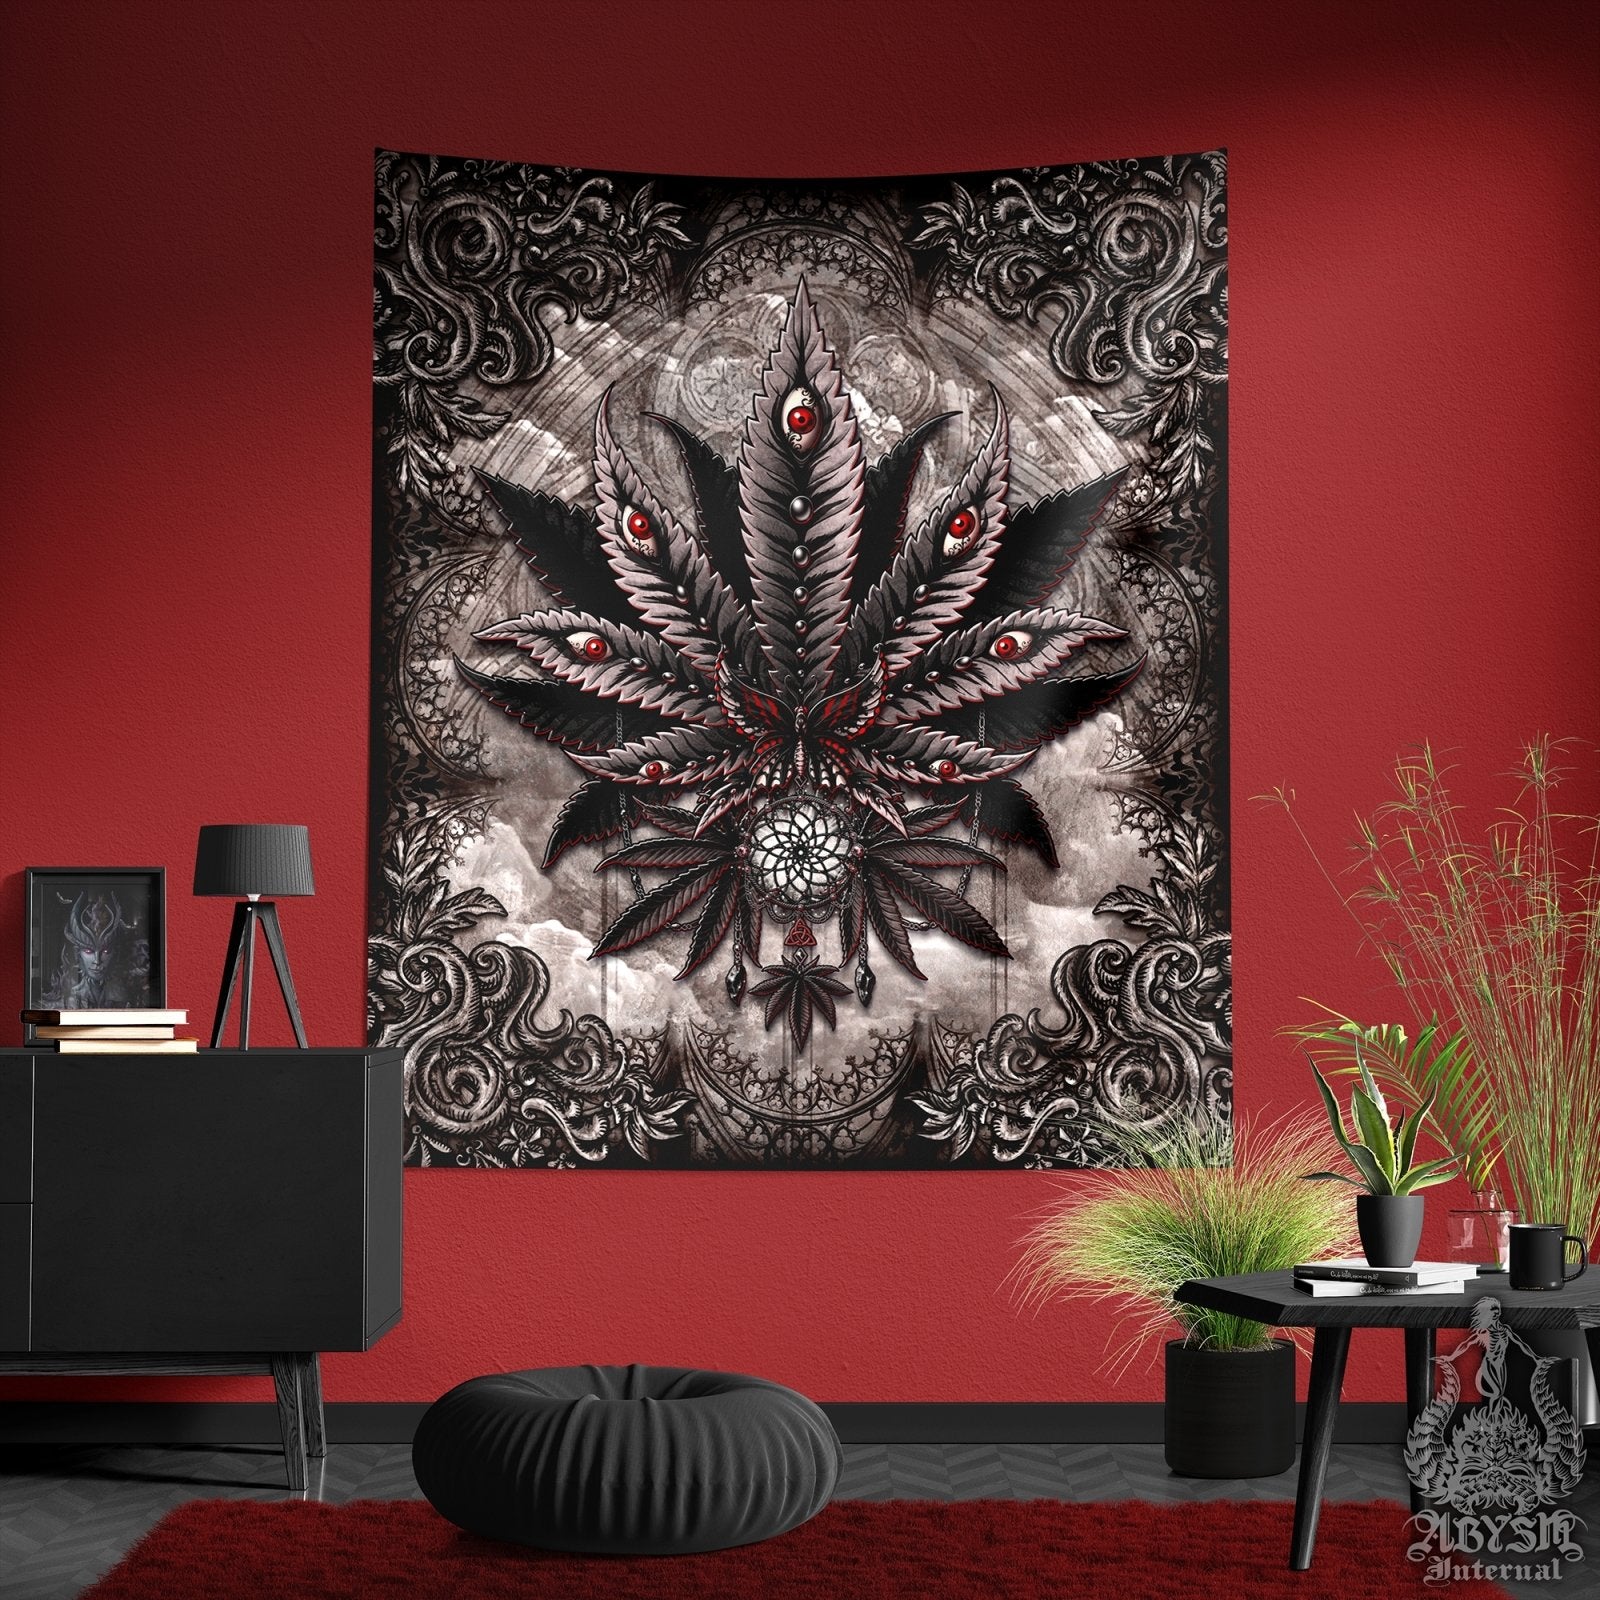 Gothic Weed Tapestry, Cannabis Shop Decor, Marijuana Wall Hanging, Goth Home Decor, Art Print, 420 Gift - Horror Grey - Abysm Internal